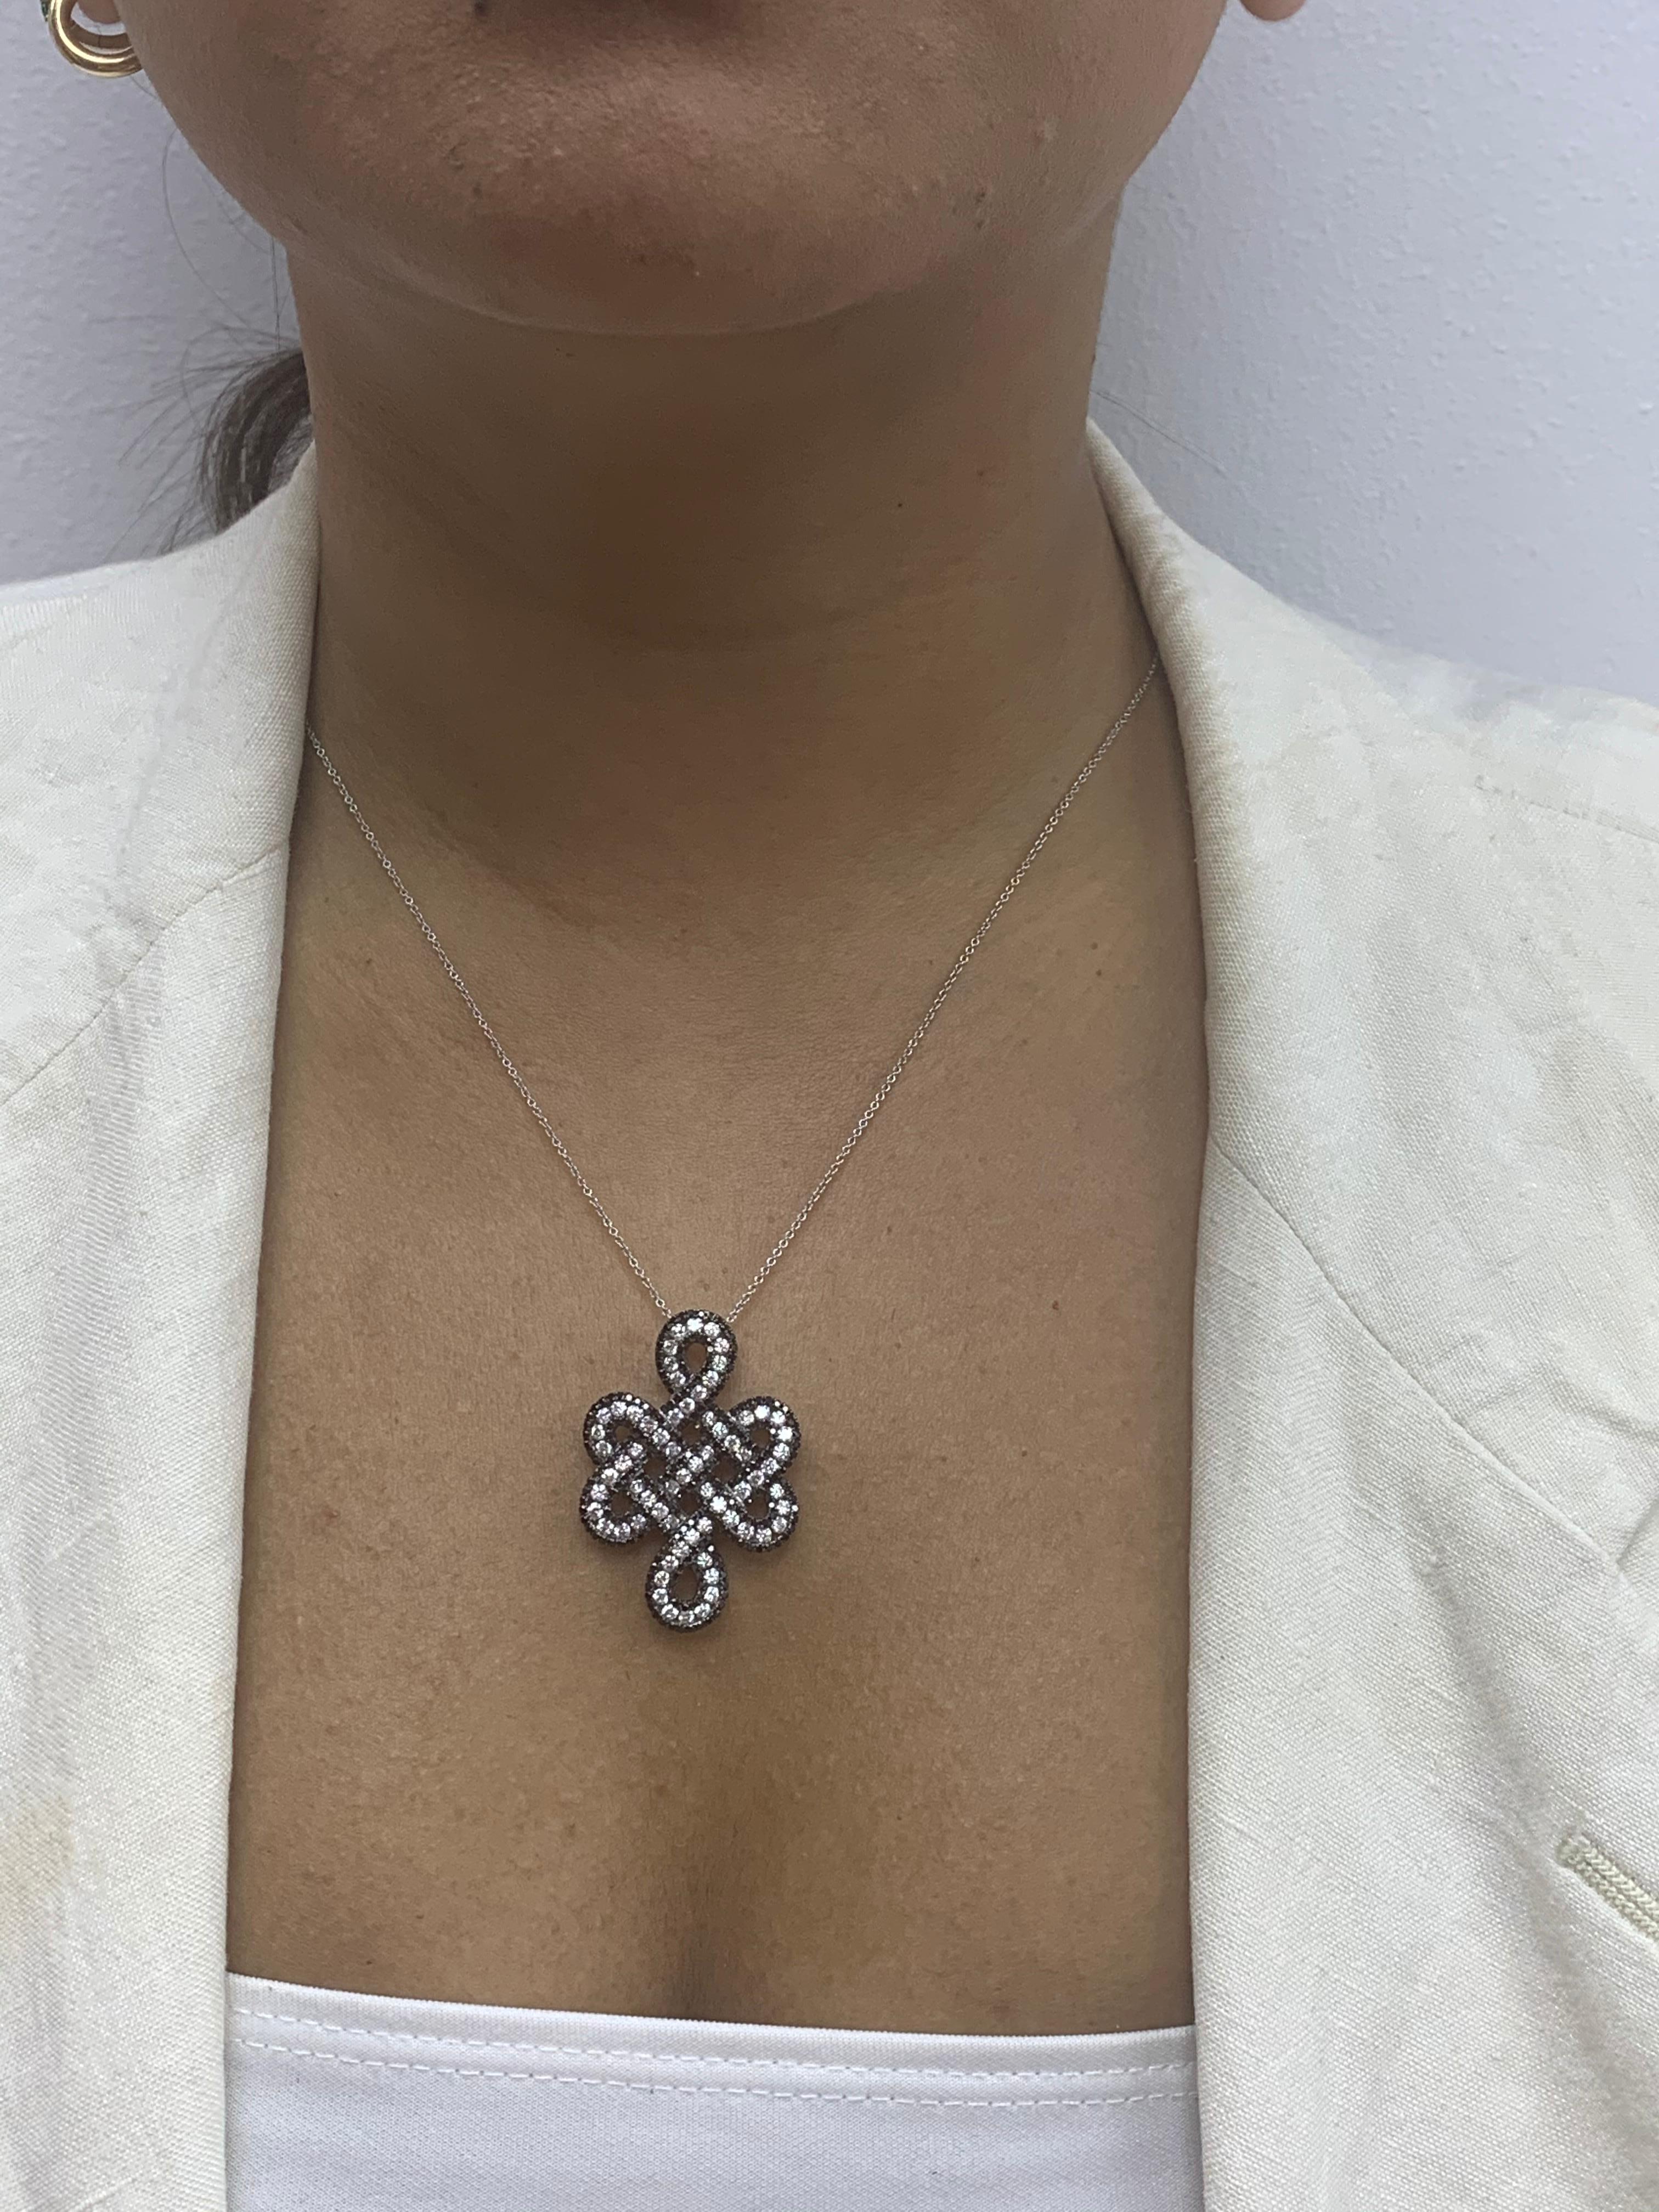 Grandeur 1.31 Carat Fancy Black and White Diamond Pendant Necklace in 18K For Sale 7